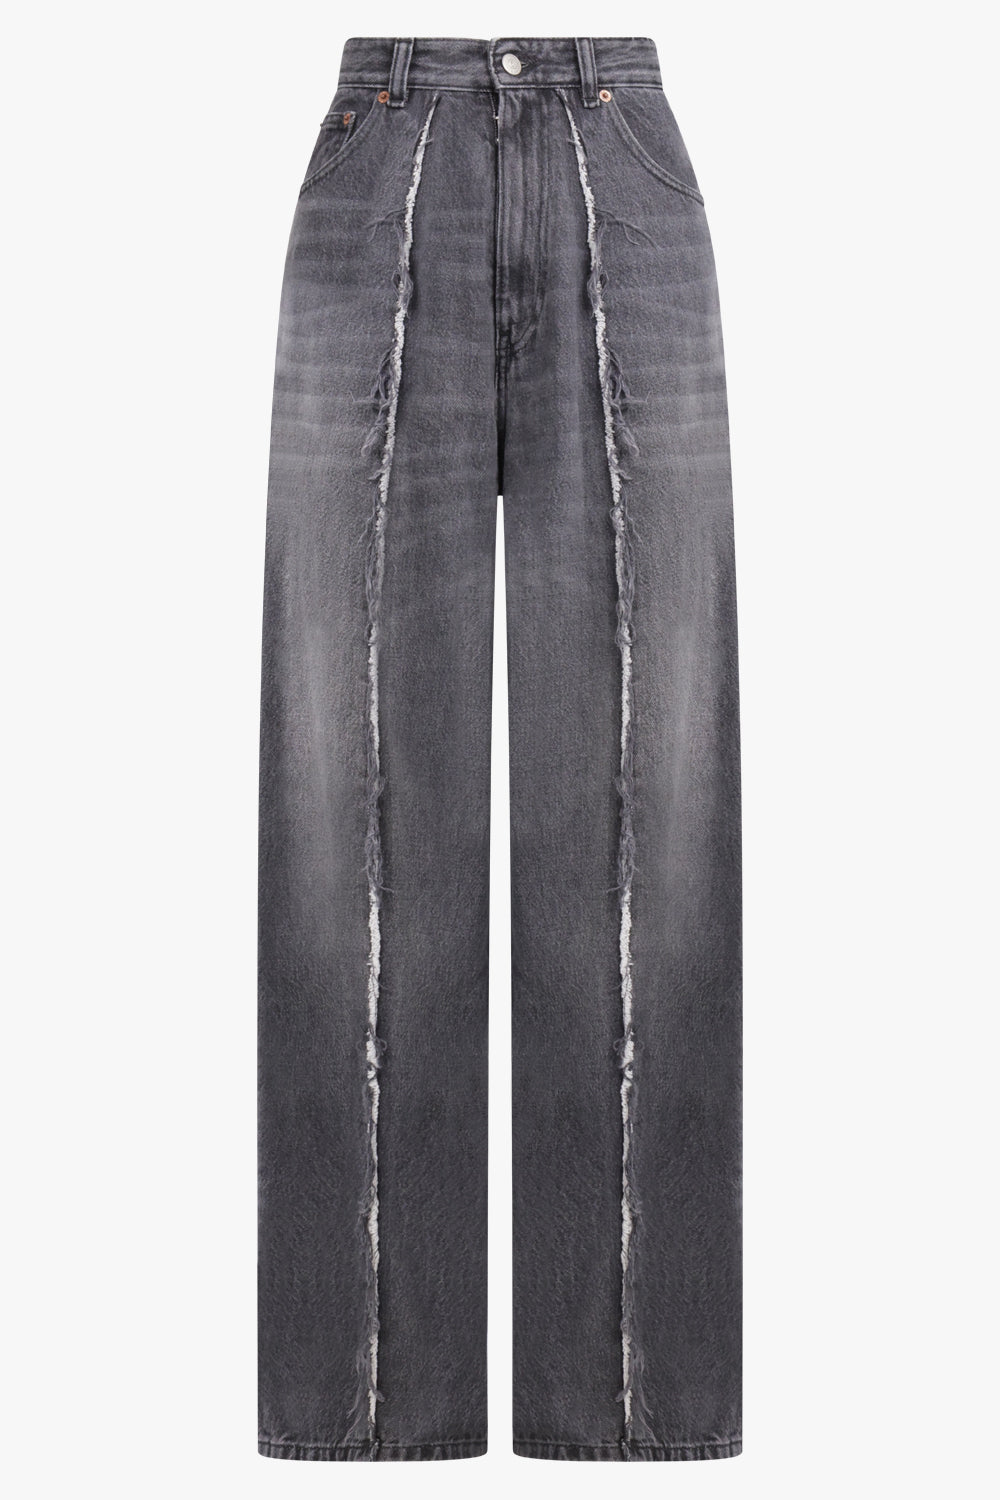 Designer pants for women - Jane de Boy